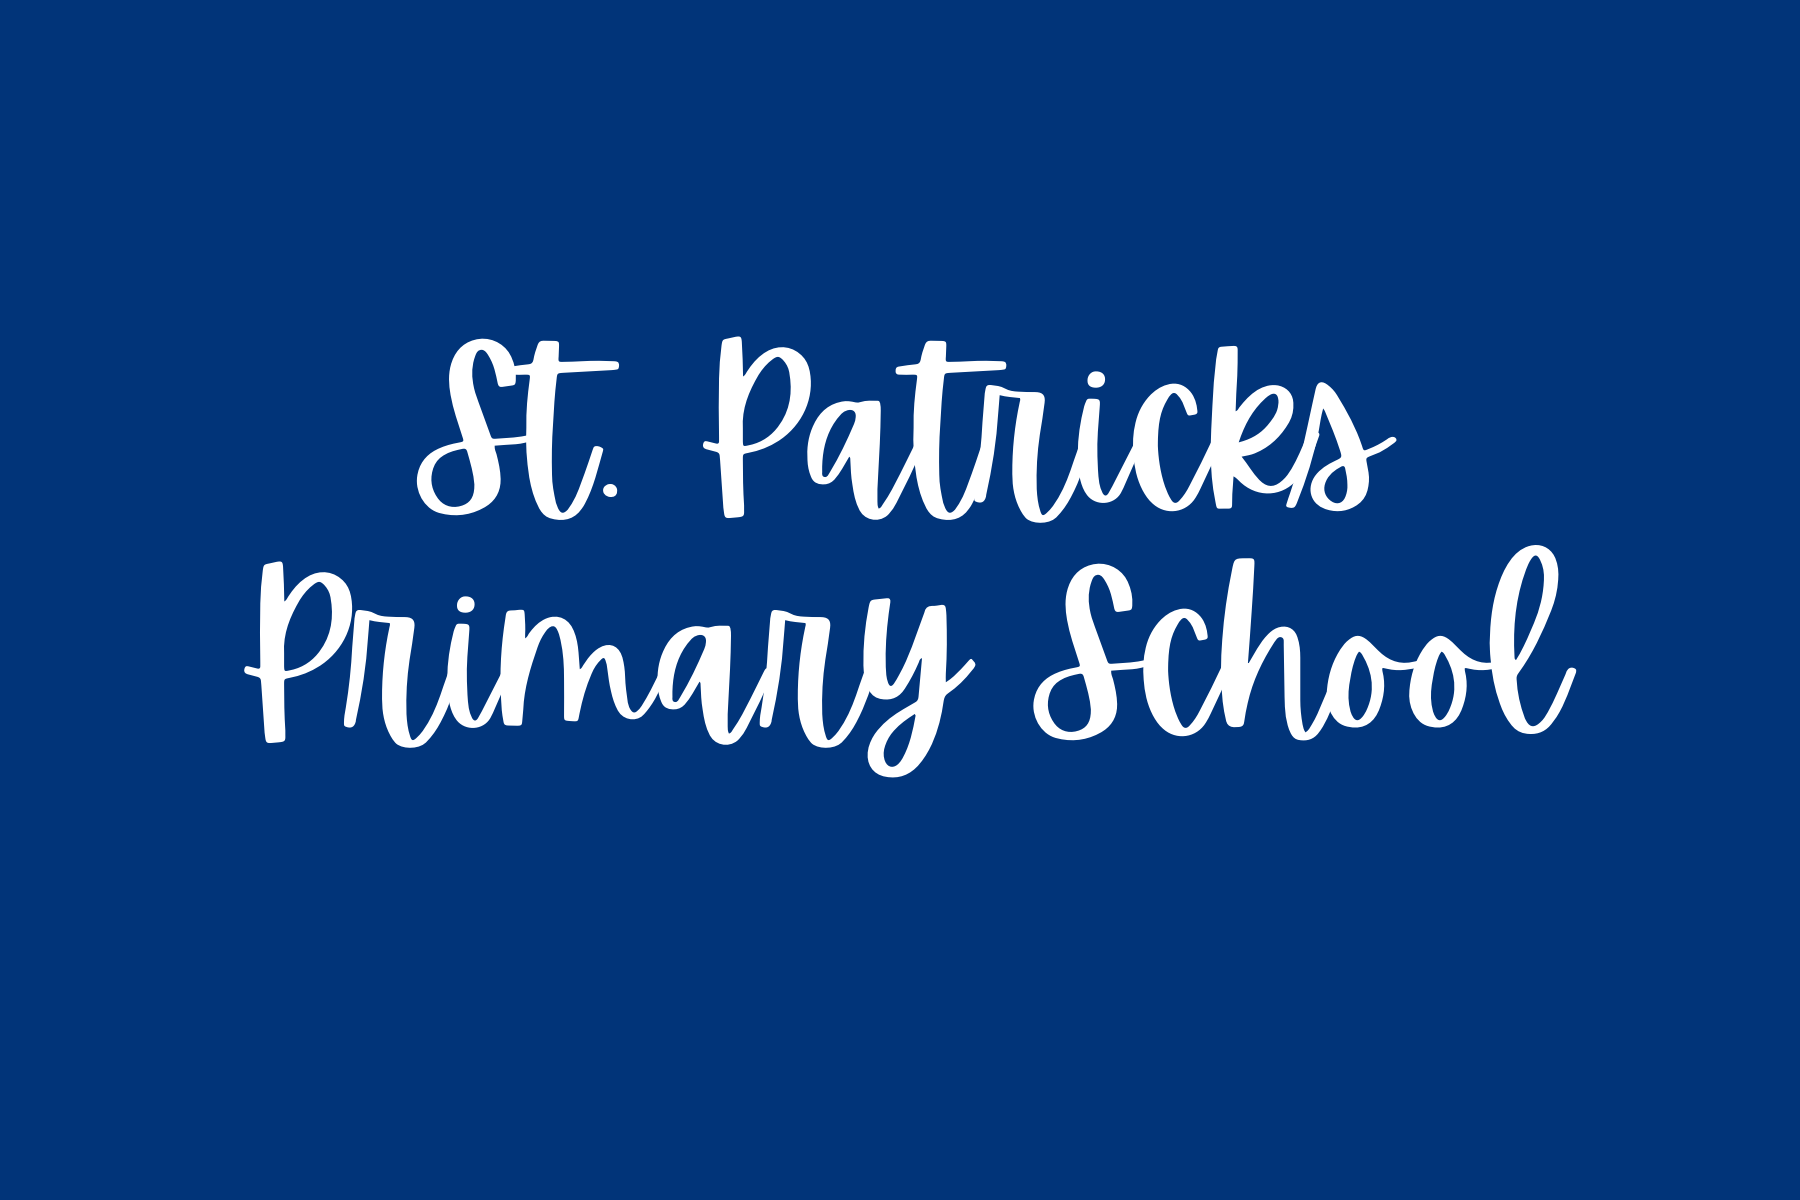 St. Patricks Primary School